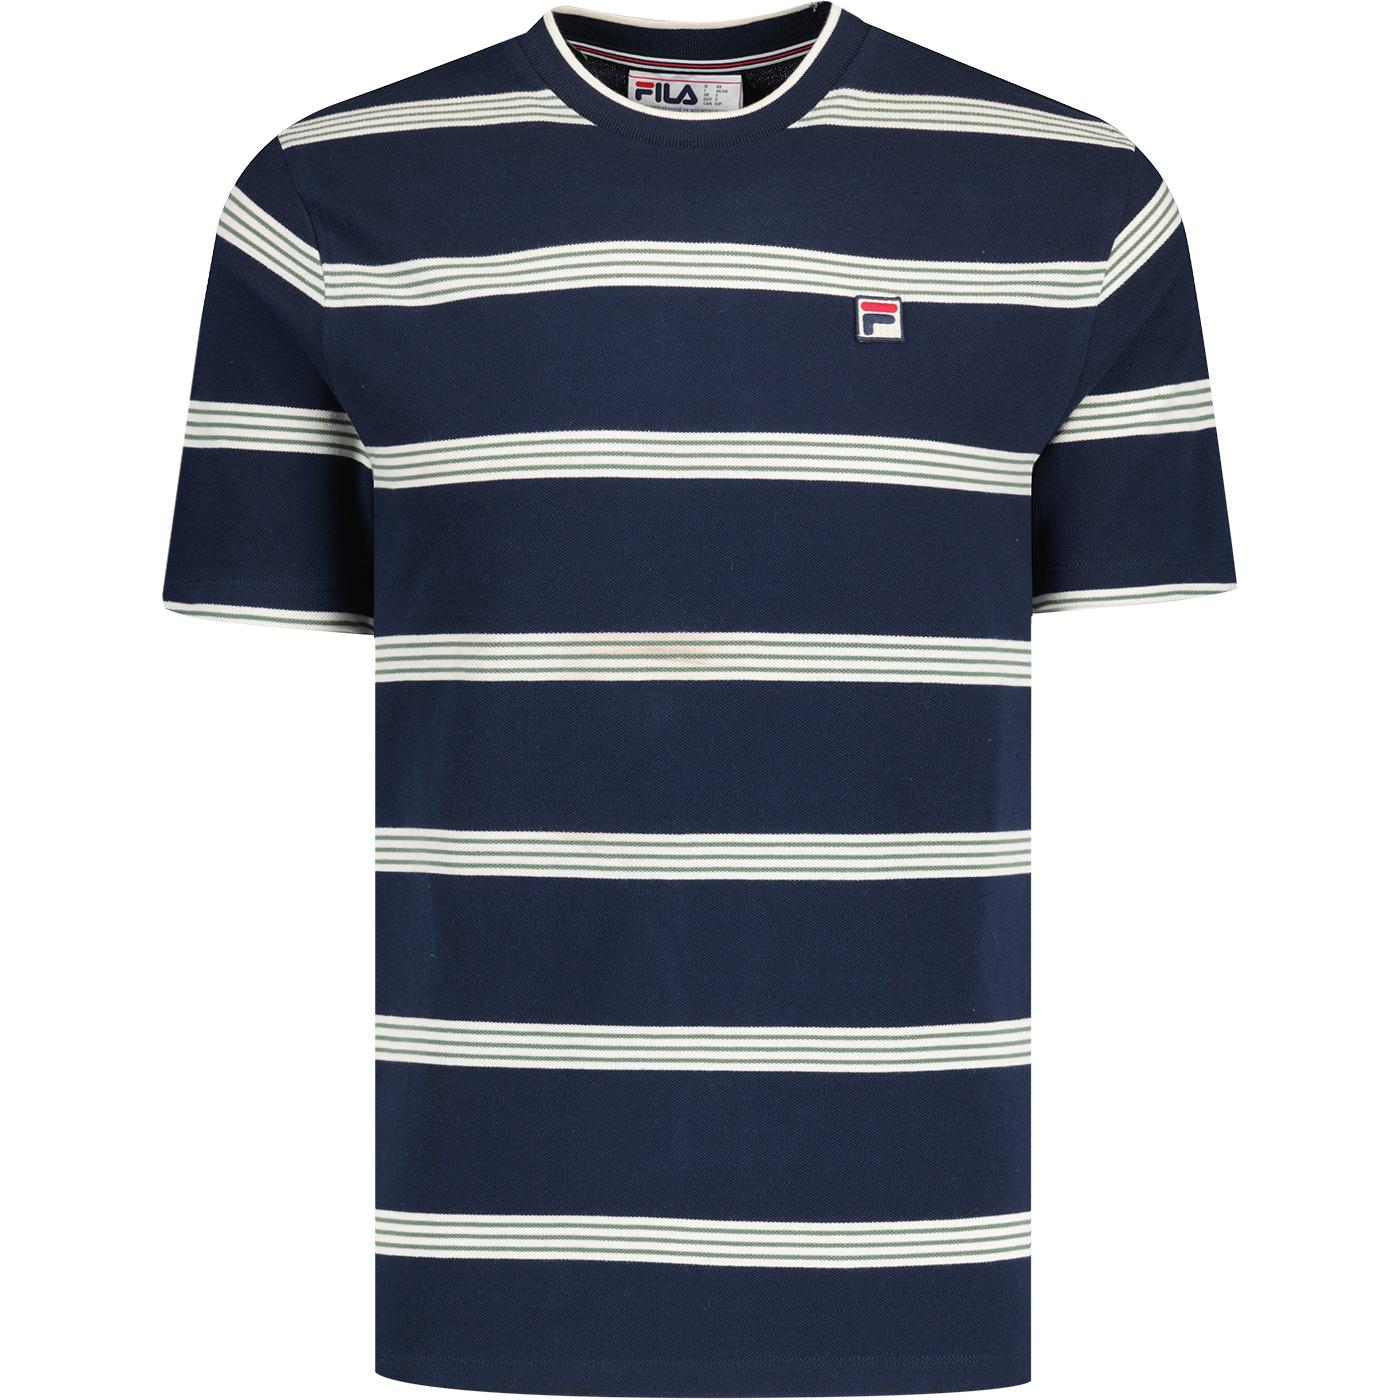 Chapman Fila Vintage Yarn Dyed Striped T-shirt N/G